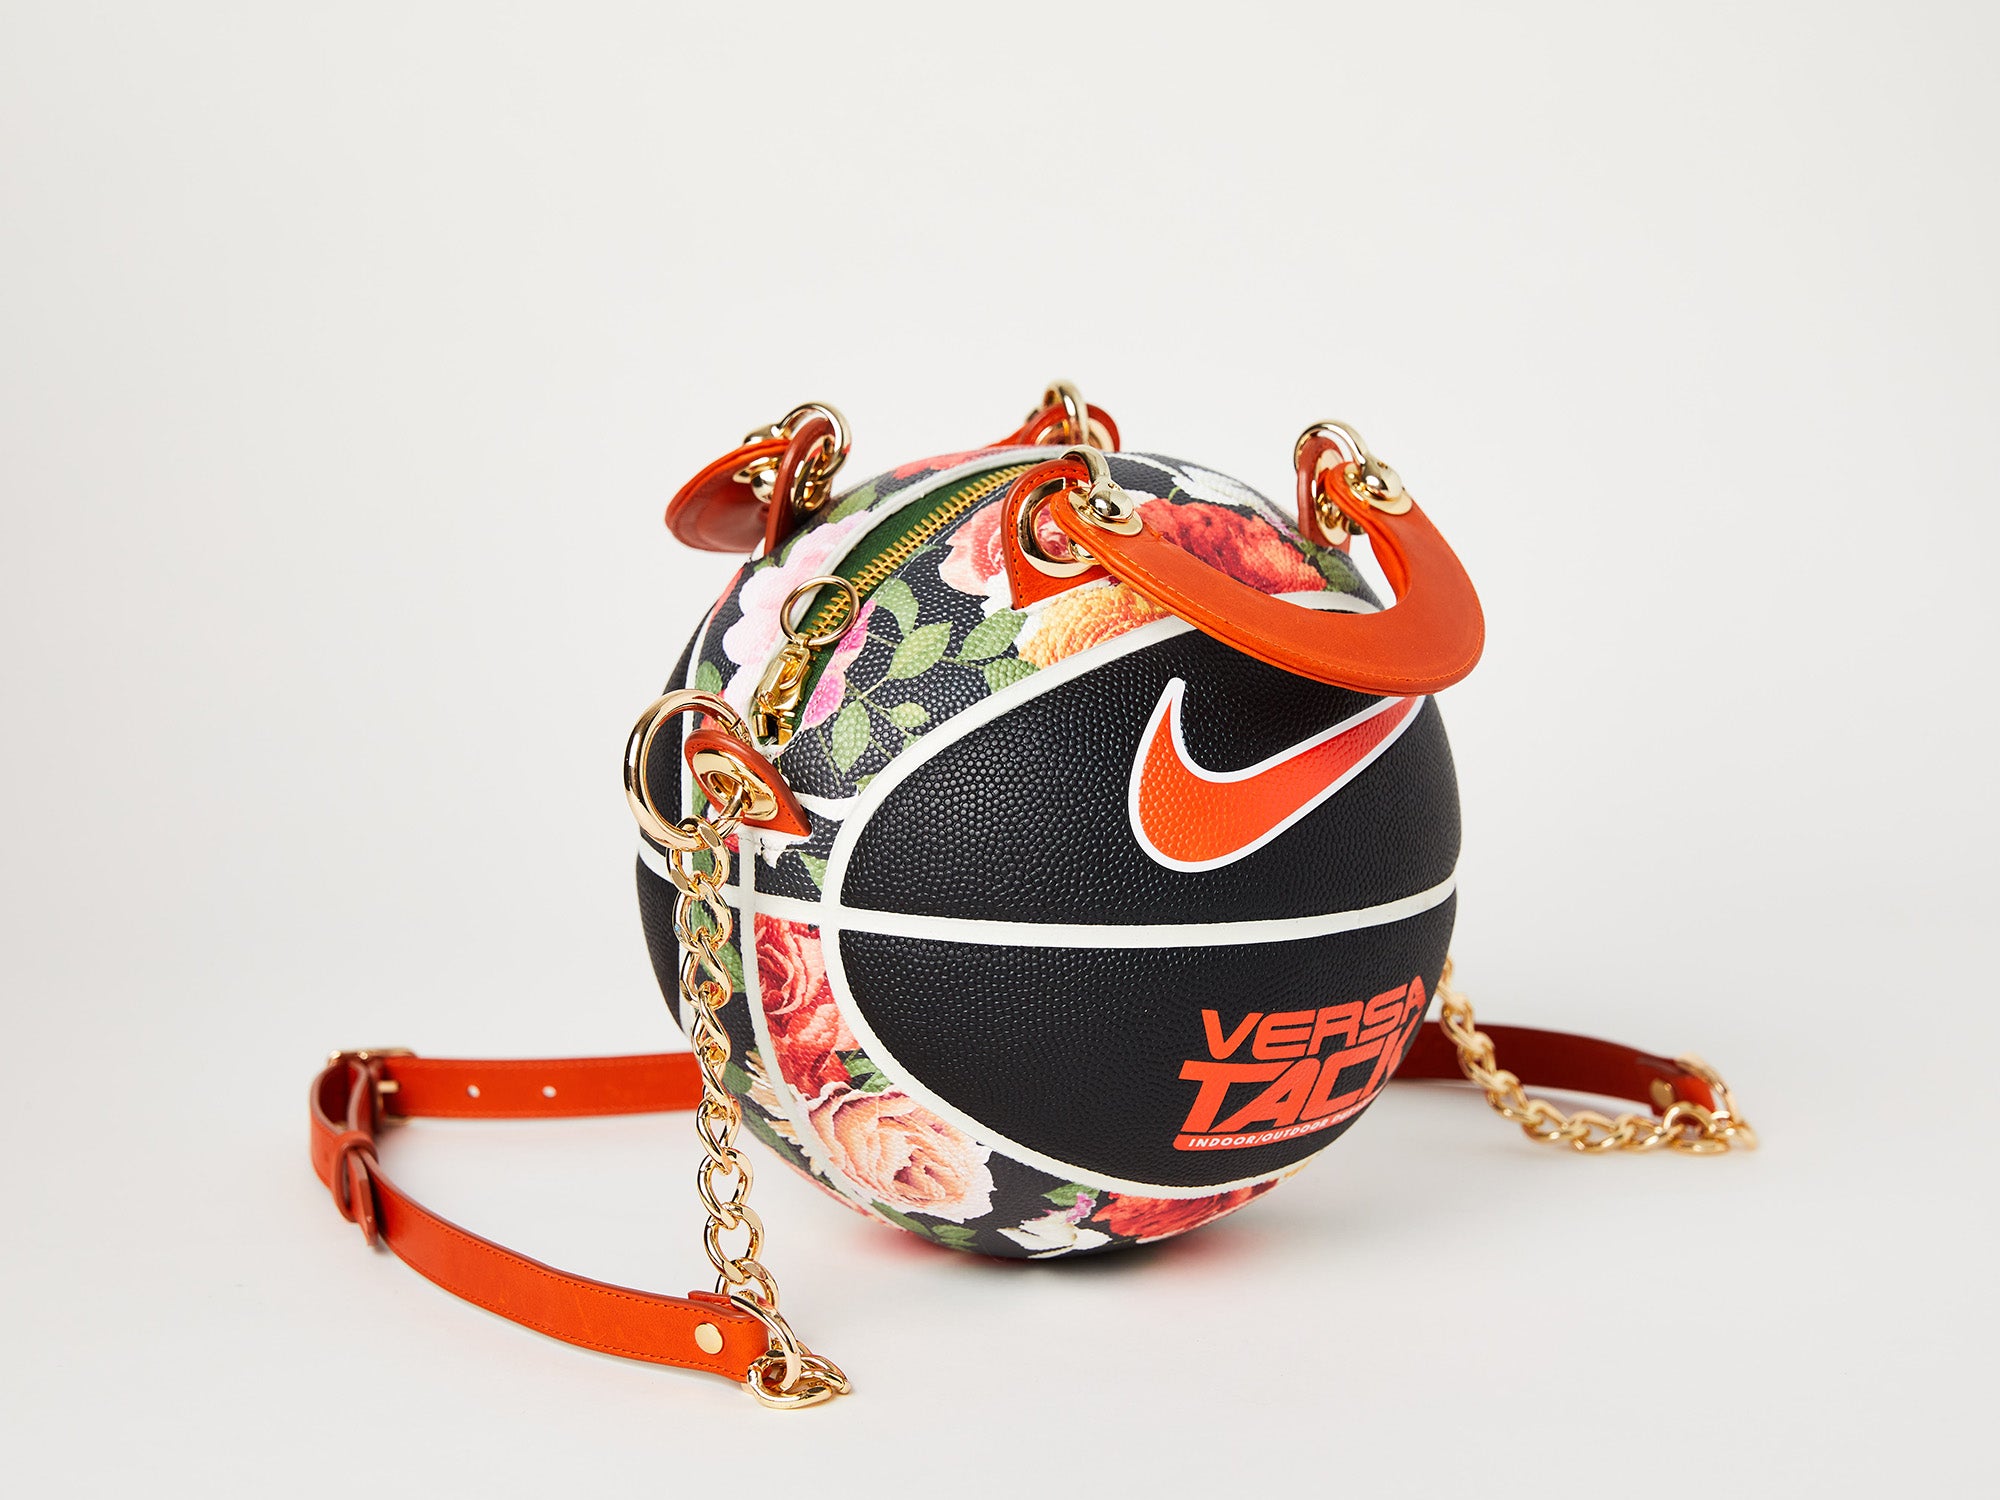 Floral Nike Versa Tack Basketball Bag